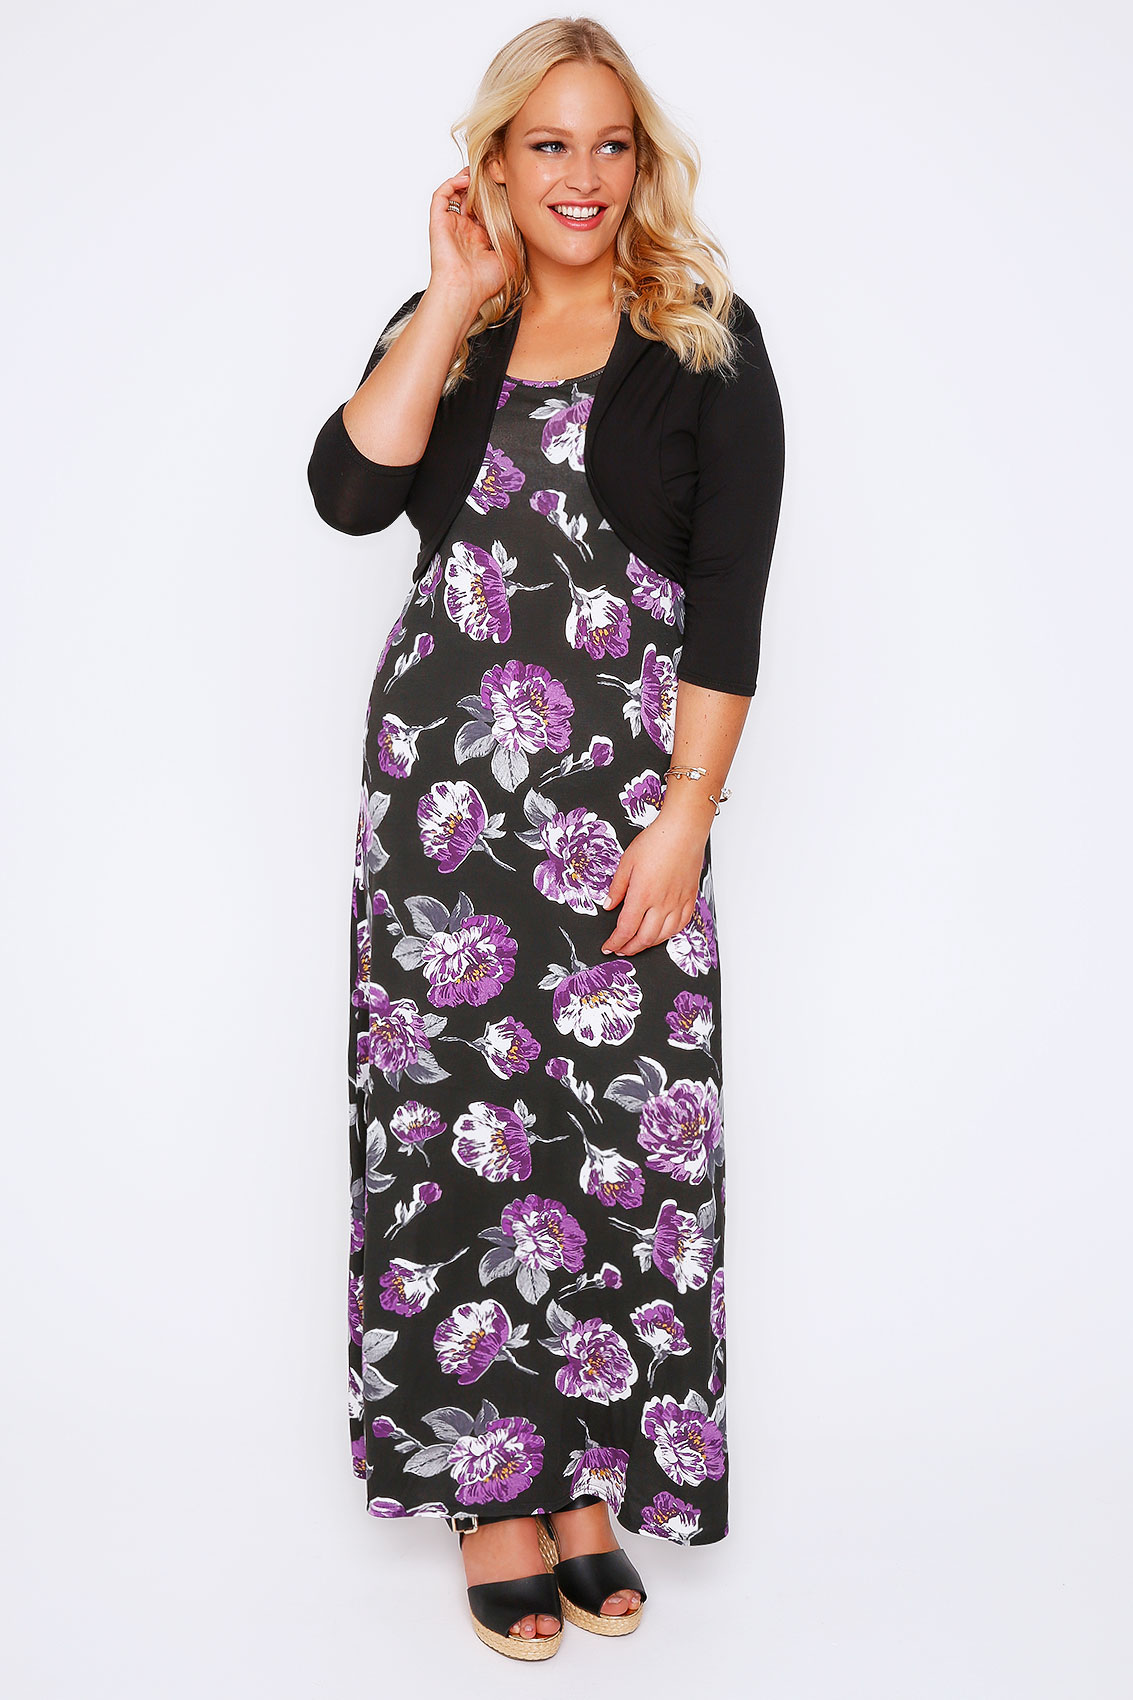 Black & Purple Floral Print Maxi Dress With Black Shrug Plus Size 16 to 32